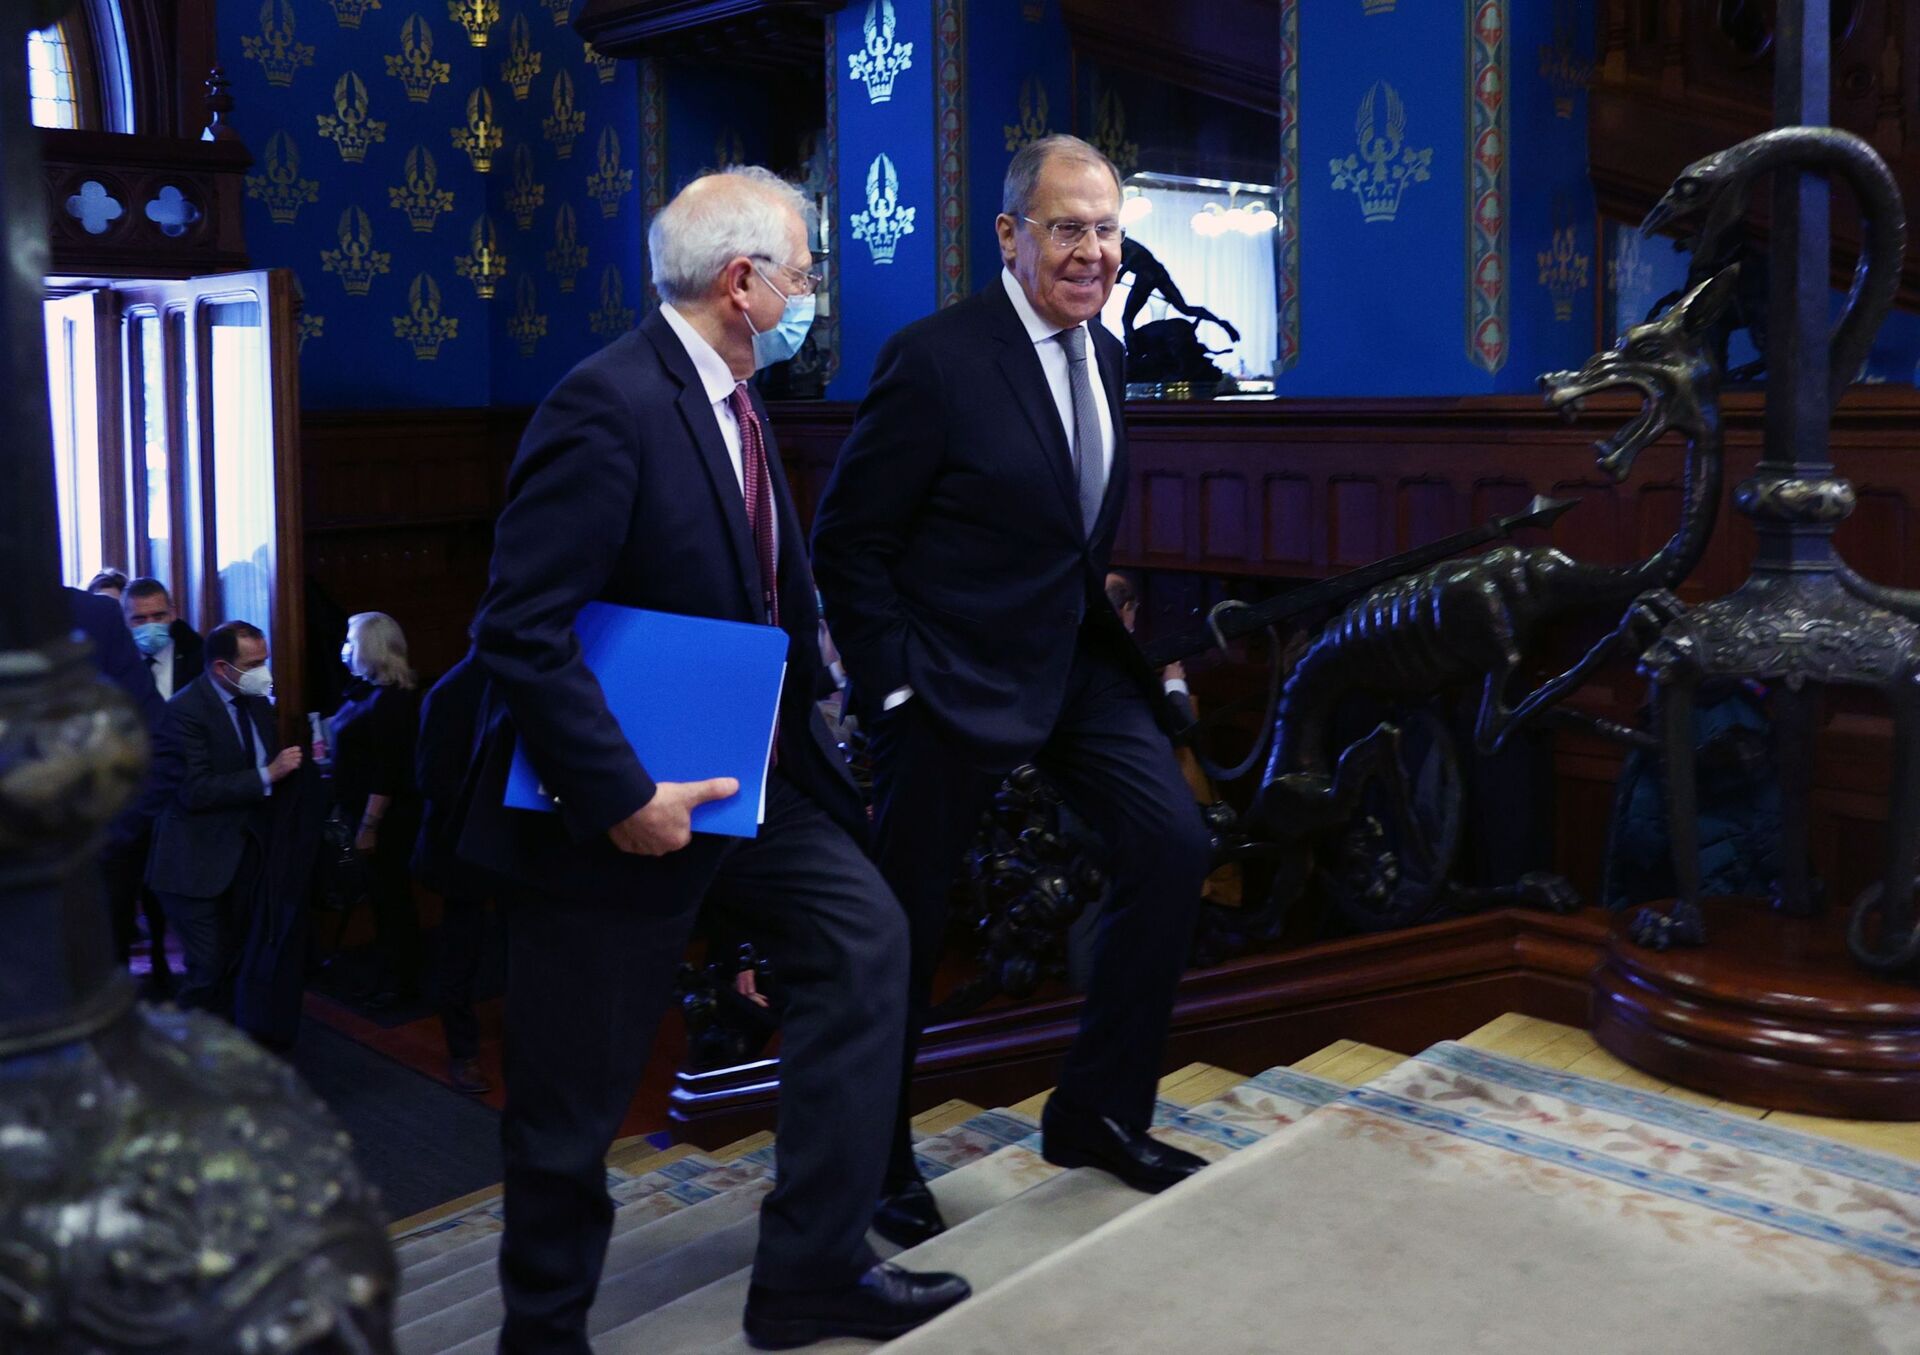 El jefe de la diplomacia europea, Josep Borrell, y el canciller ruso, Serguéi Lavrov - Sputnik Mundo, 1920, 01.04.2021